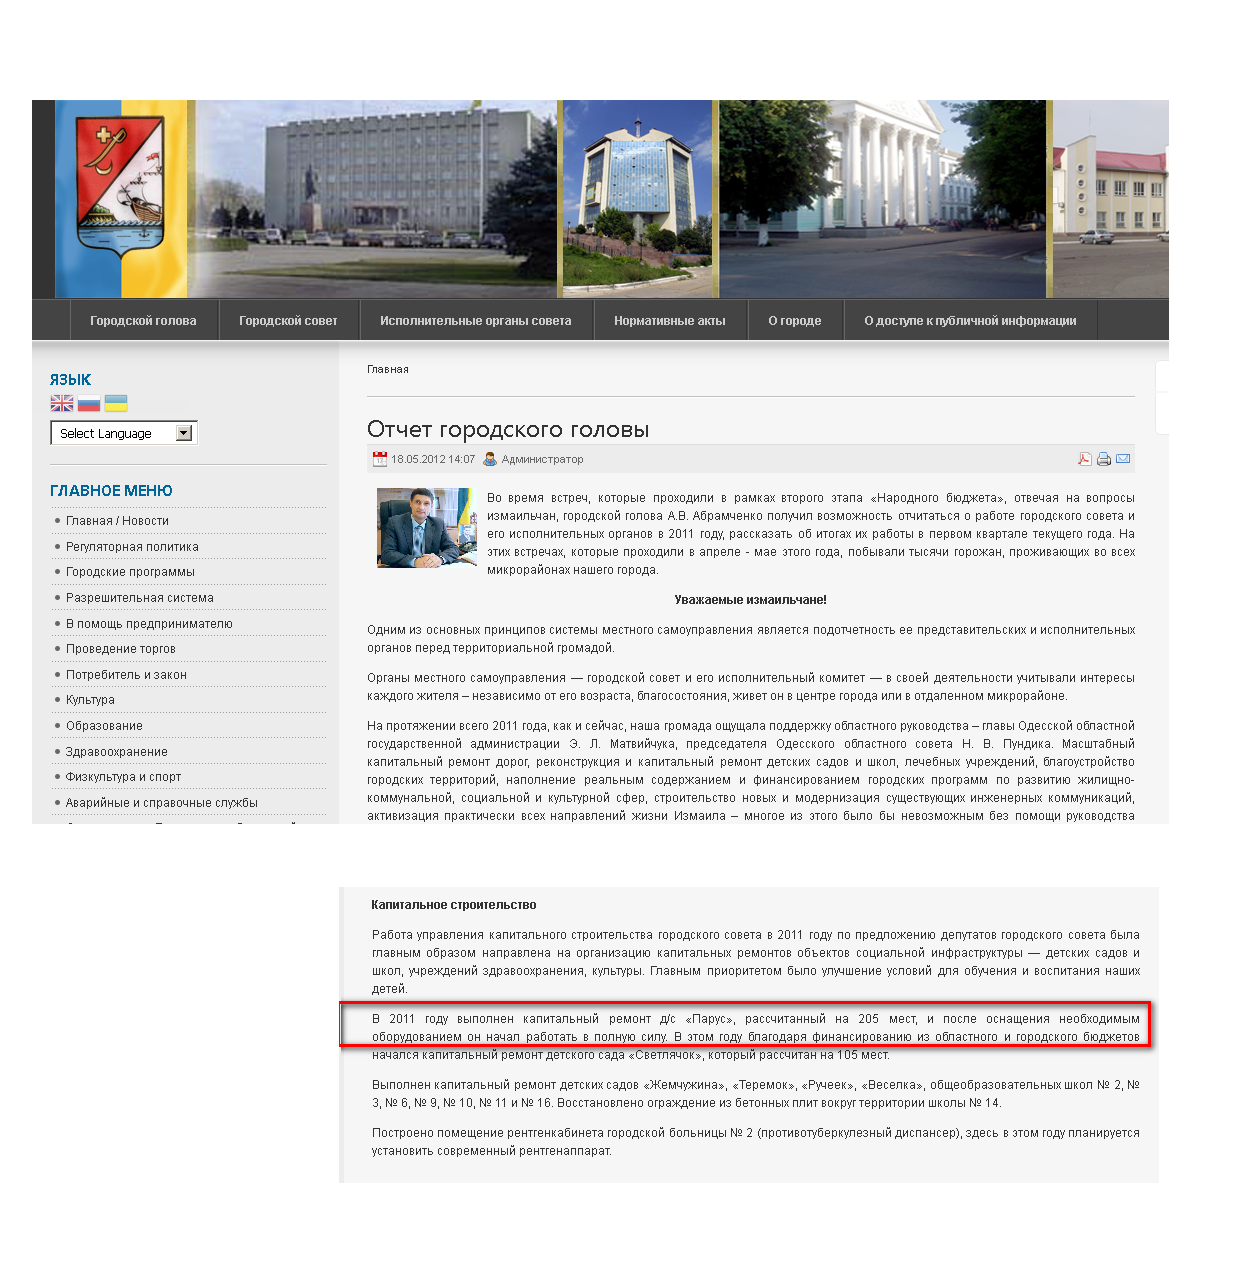 http://www.izmail-rada.gov.ua/component/content/article/37-2010-02-23-08-37-13/2193-2012-05-18-12-07-26